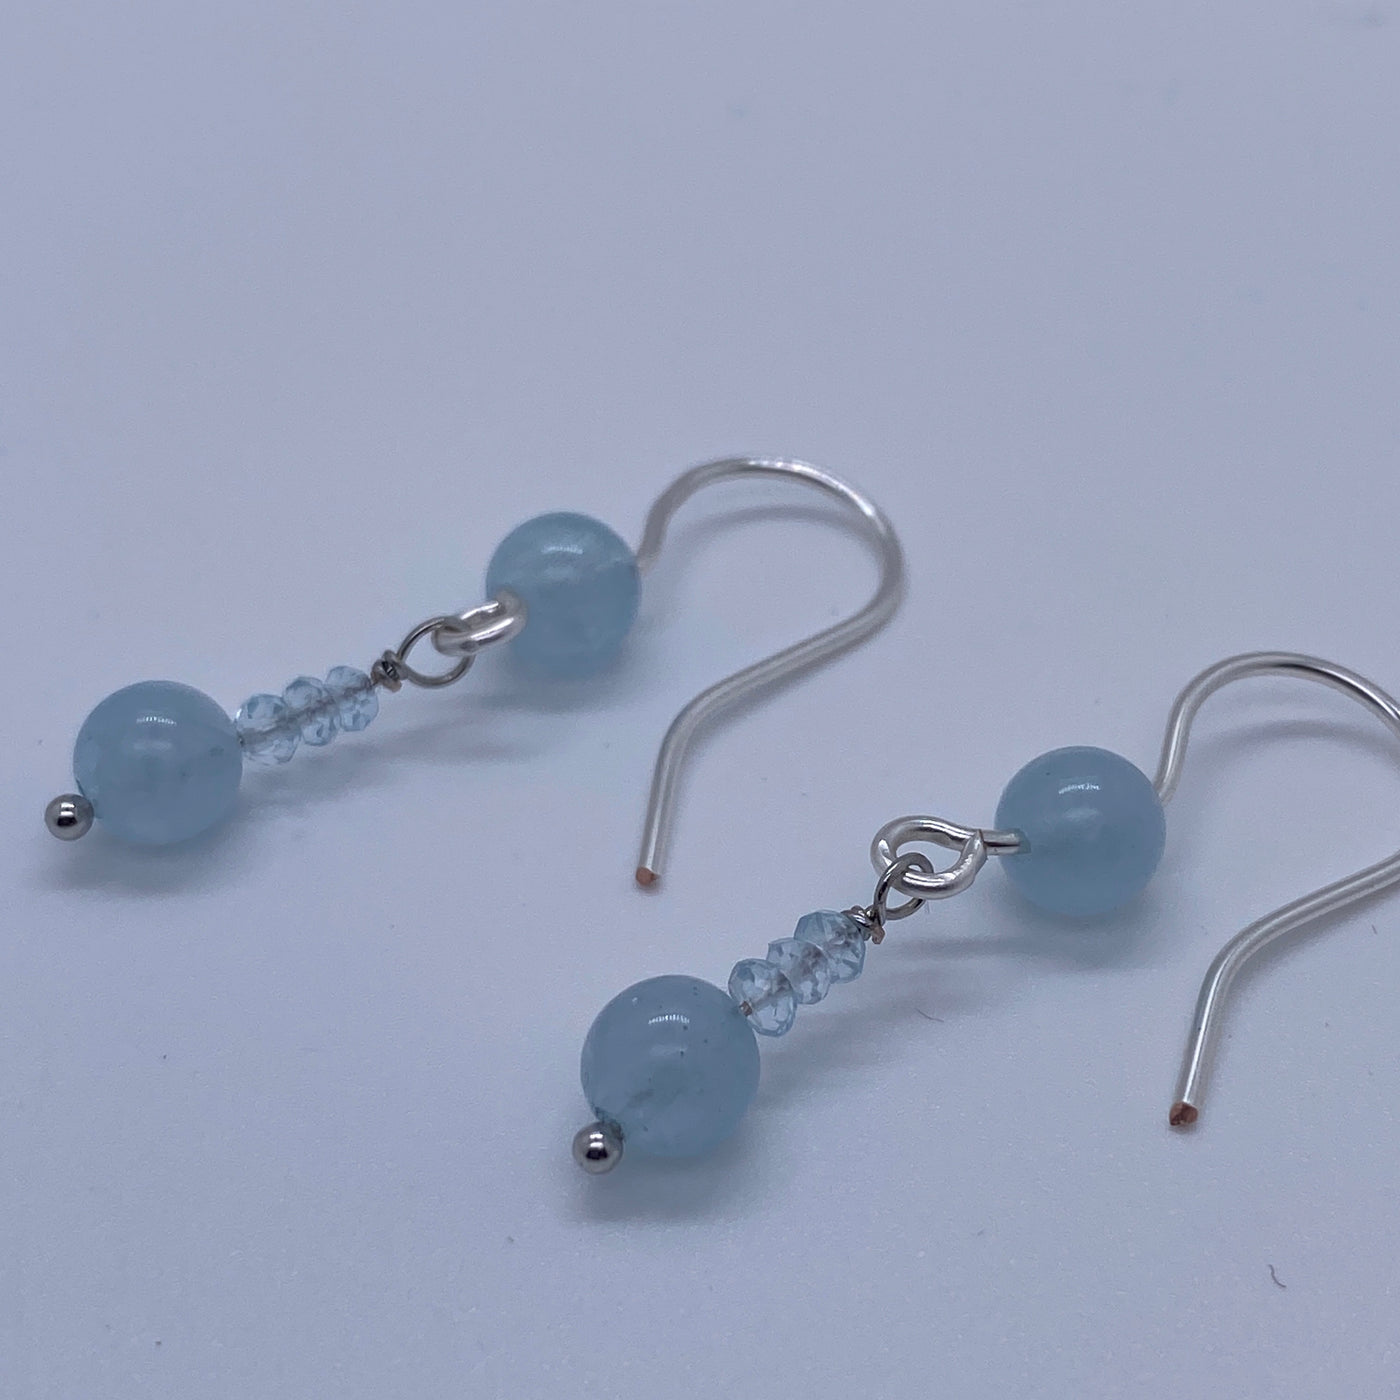 Aquamarine and silver earrings